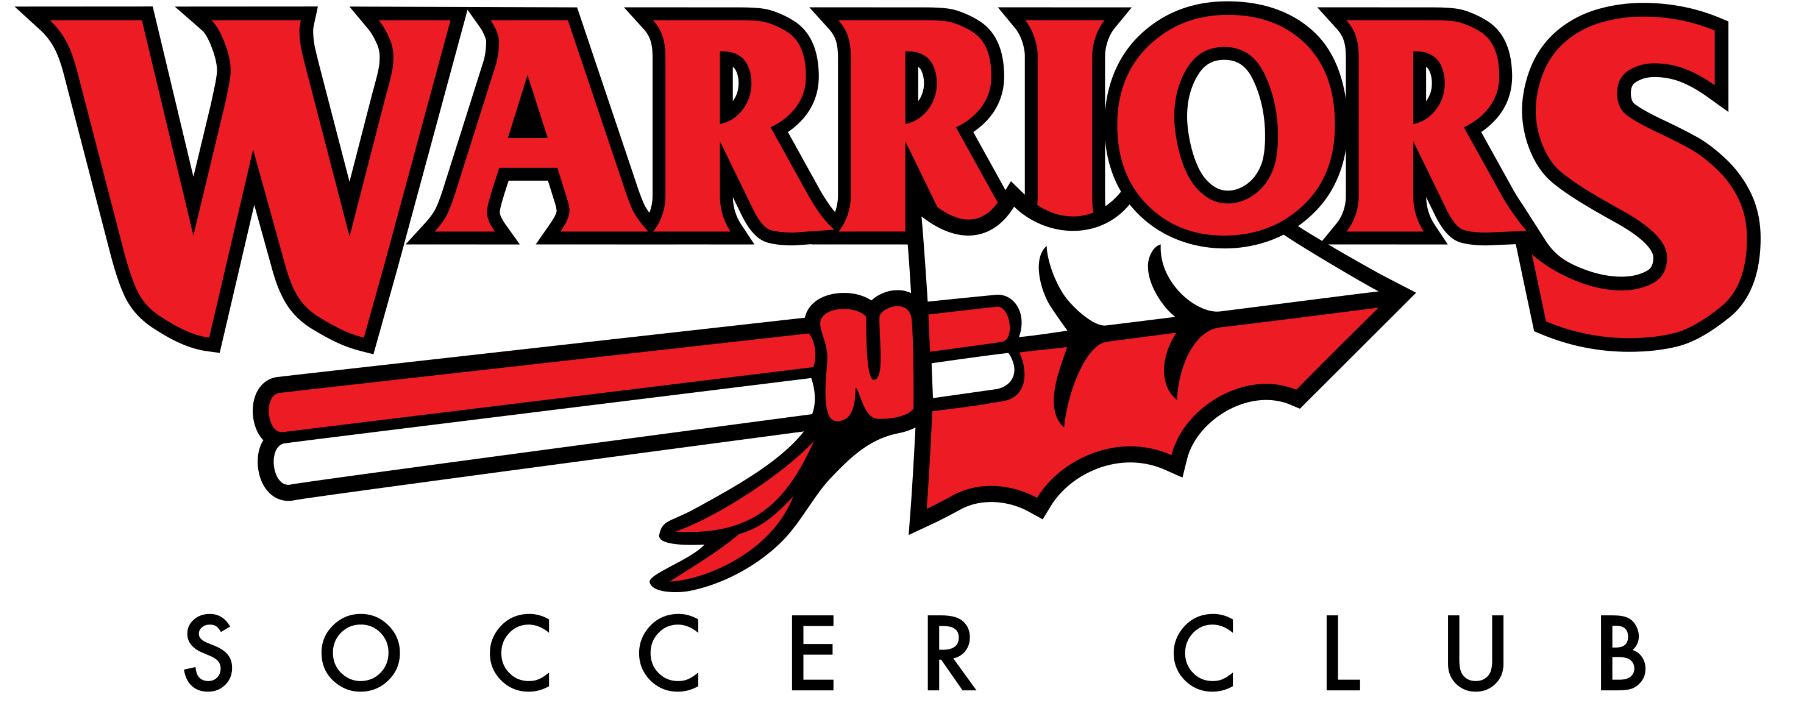 Warriors Soccer Club